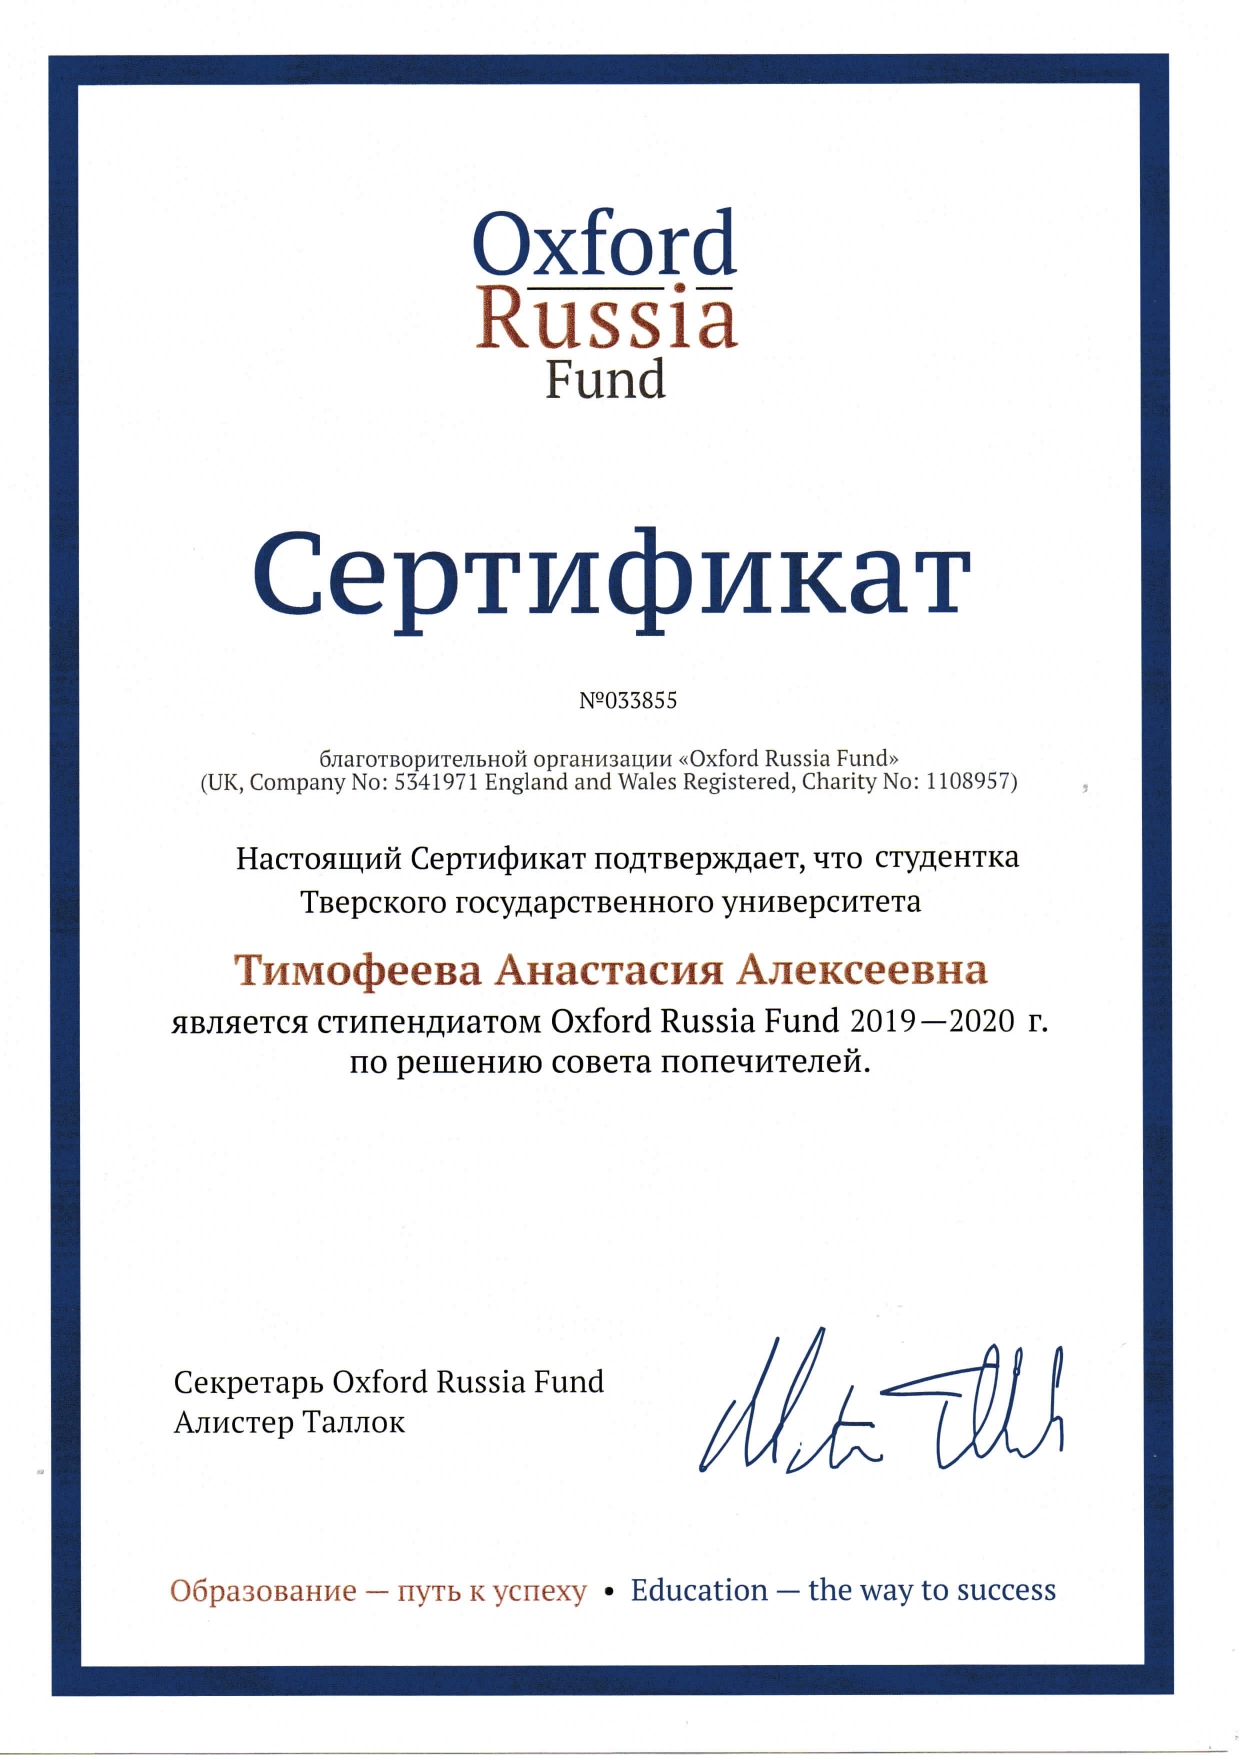 Тимофеева сертификат.jpg